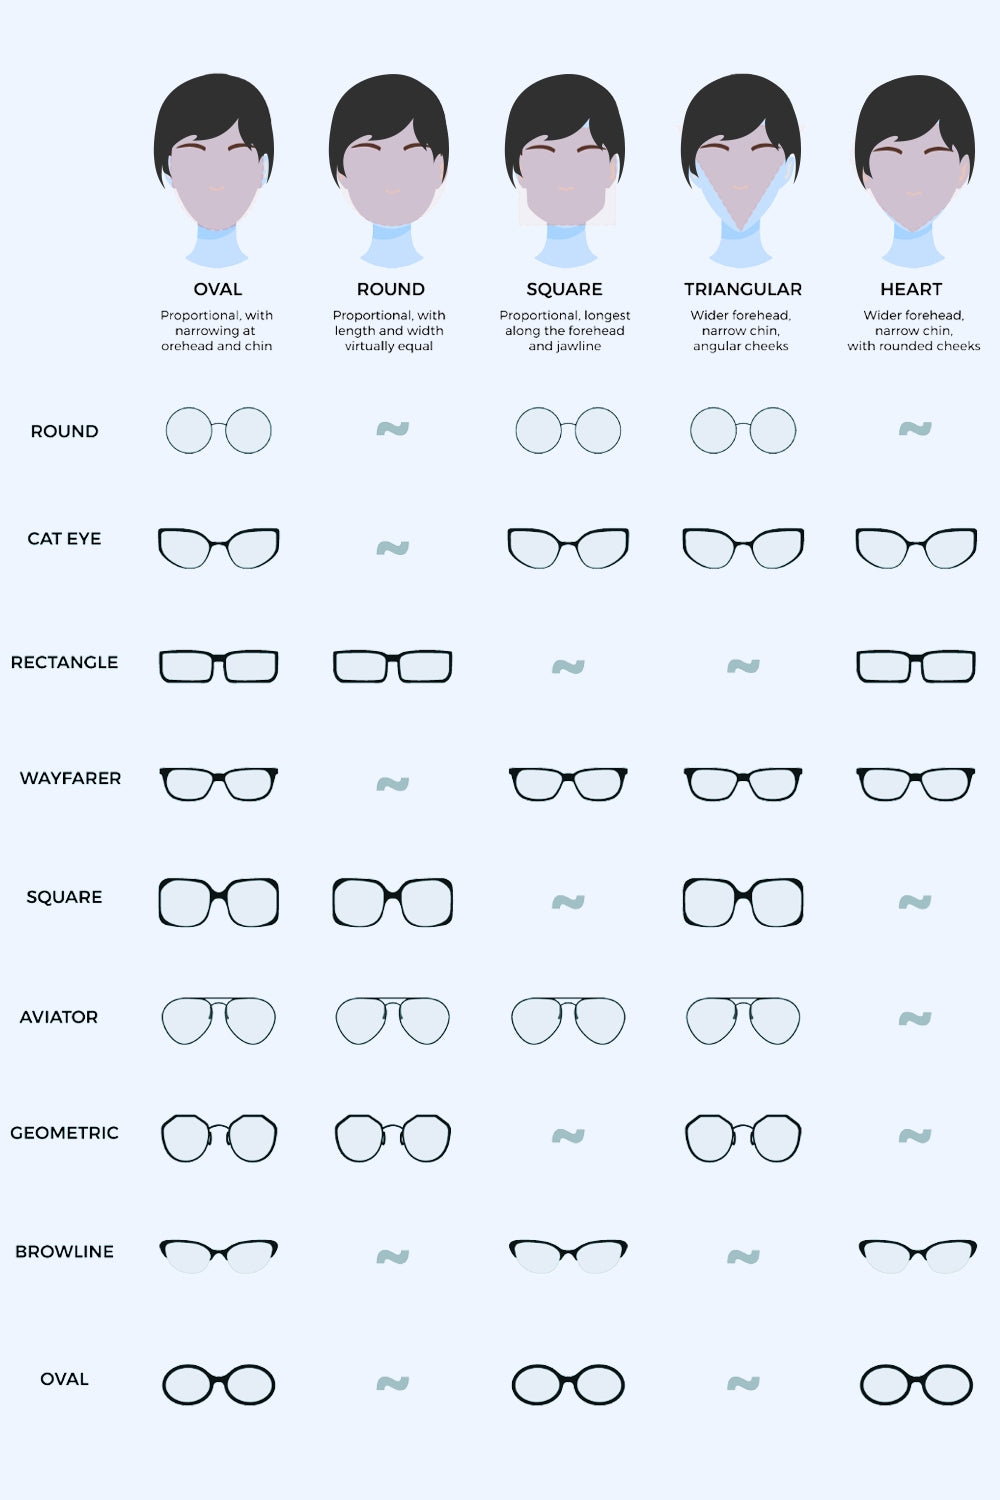 UV400 Polycarbonate Wayfarer Sunglasses - Sunglasses - FITGGINS